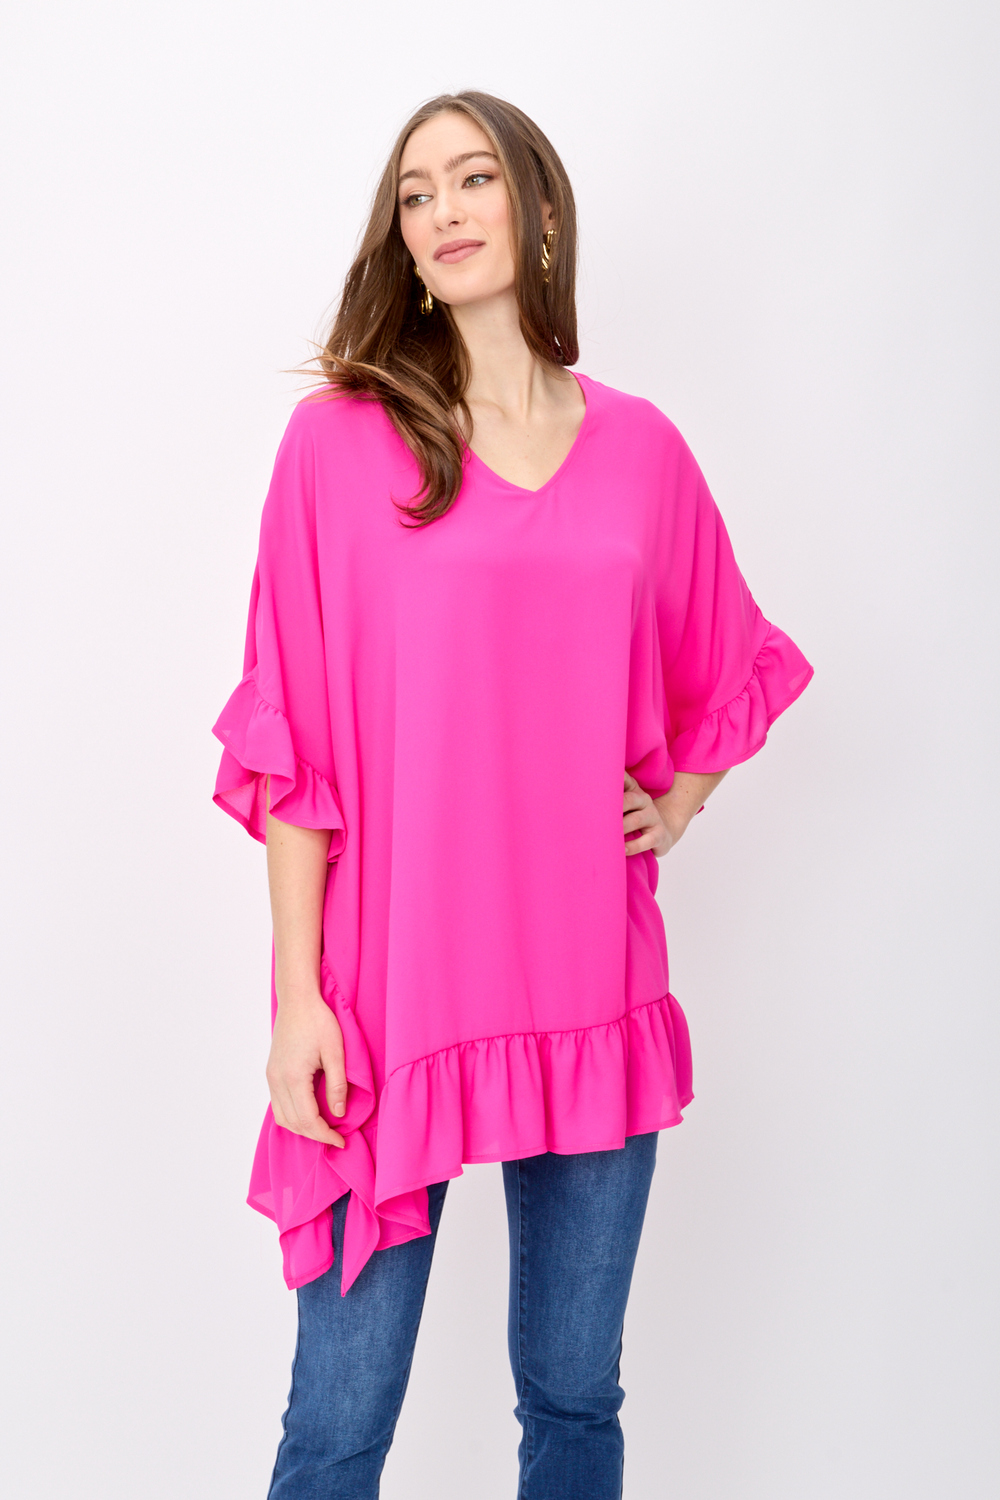 Ruffle Sleeve Oversized Top Style 241311. Ultra Pink